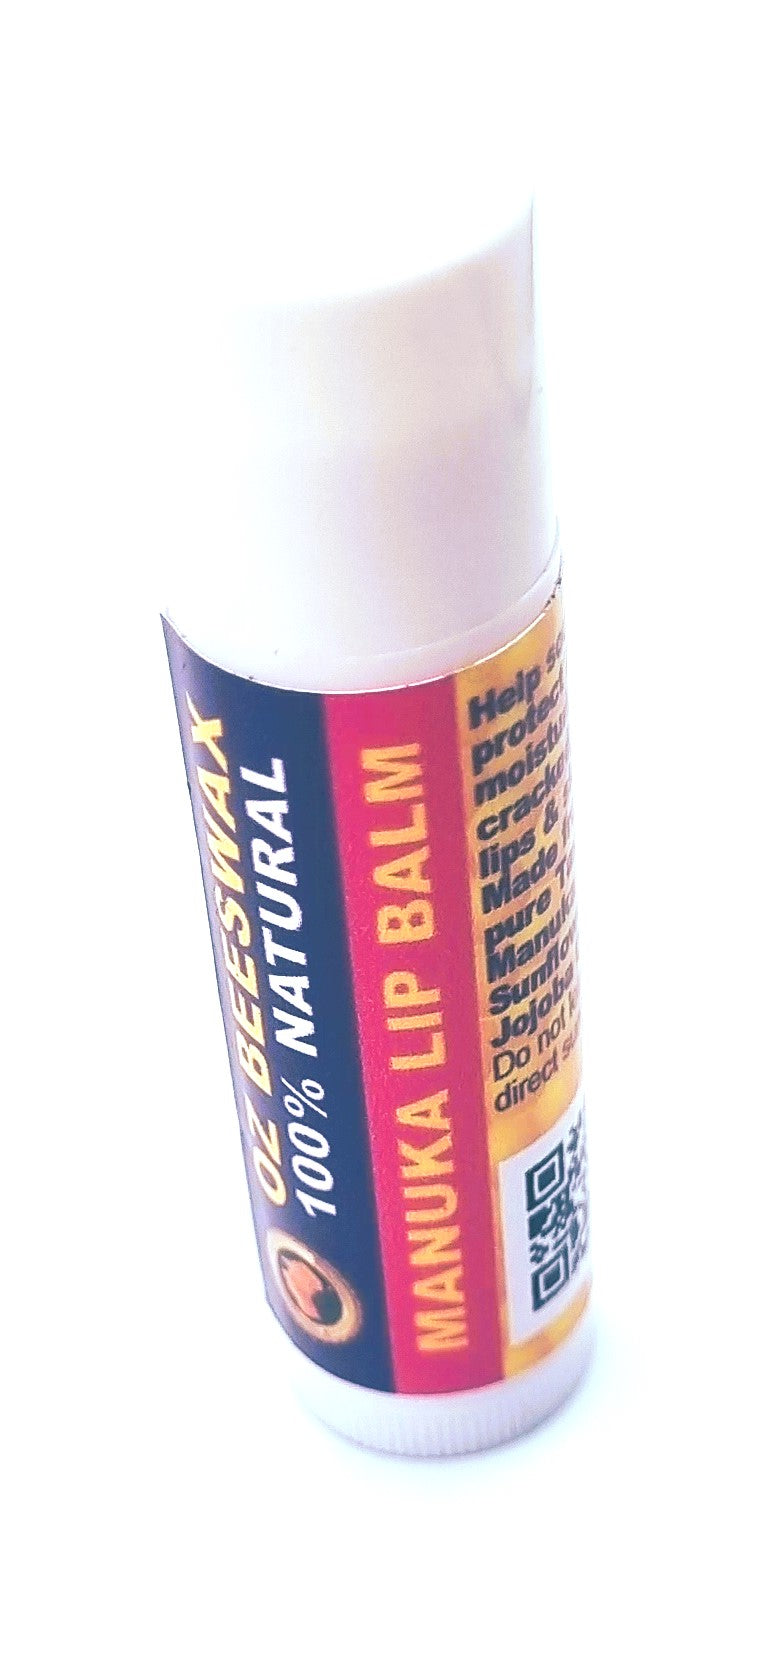 Manuka Beeswax Lip Balm Stick Family 6 Pack